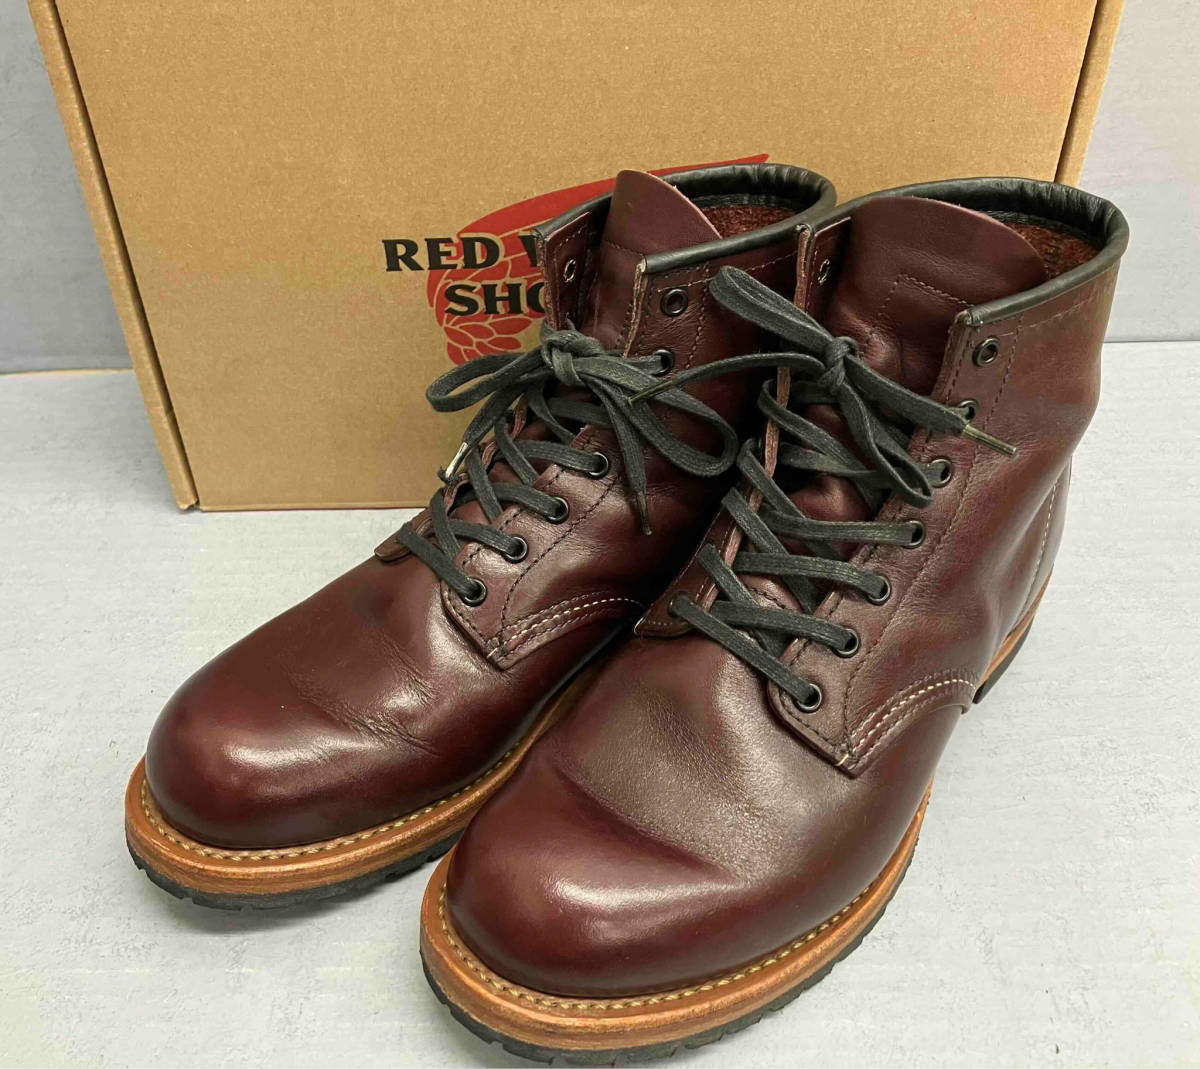 RED WING レッドウィング メンズ ブーツ 9411 7 1/2インチ 25.5cm BLACK CHERRY USA製 箱付き